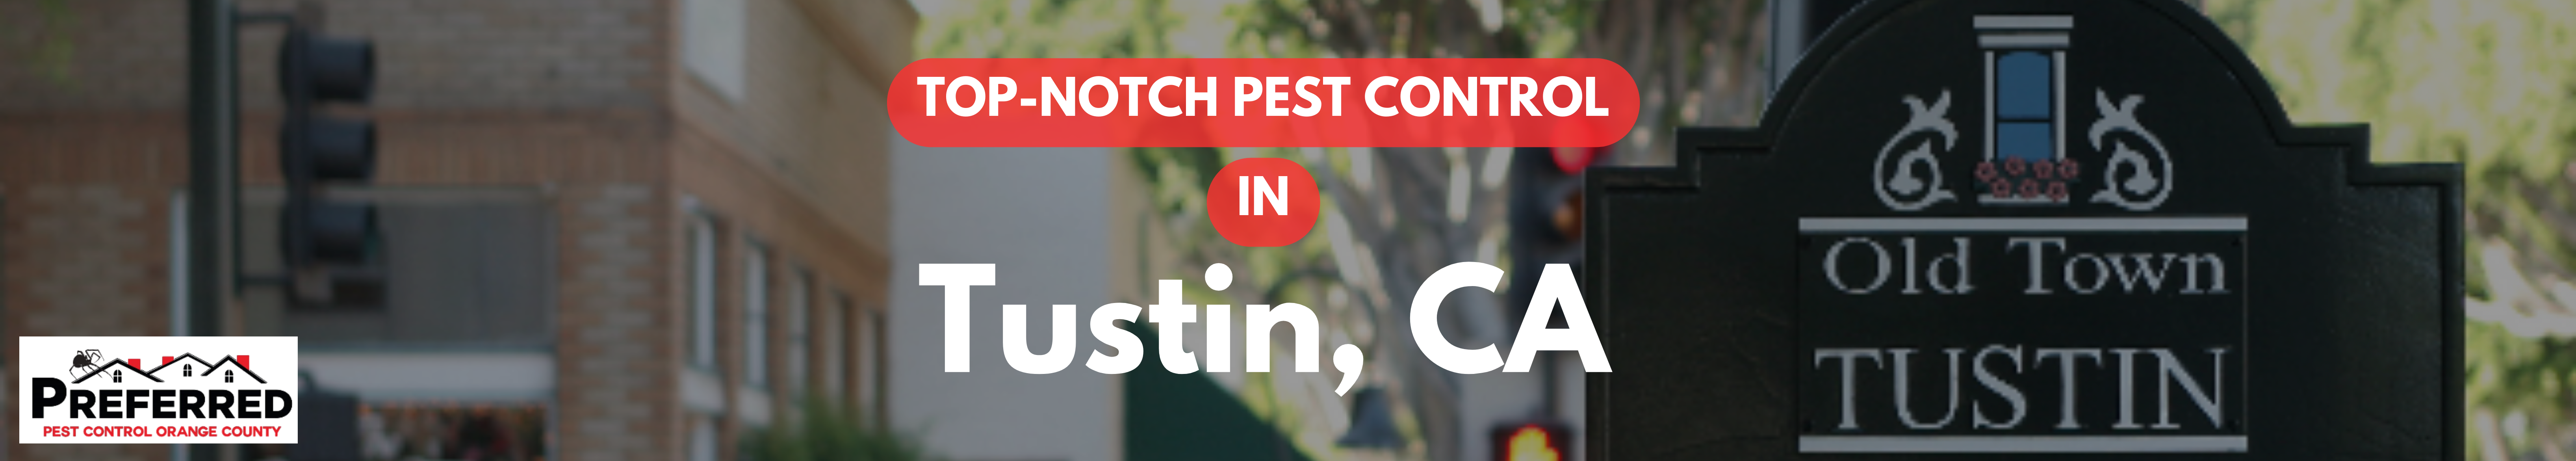 pest control in tustin CA